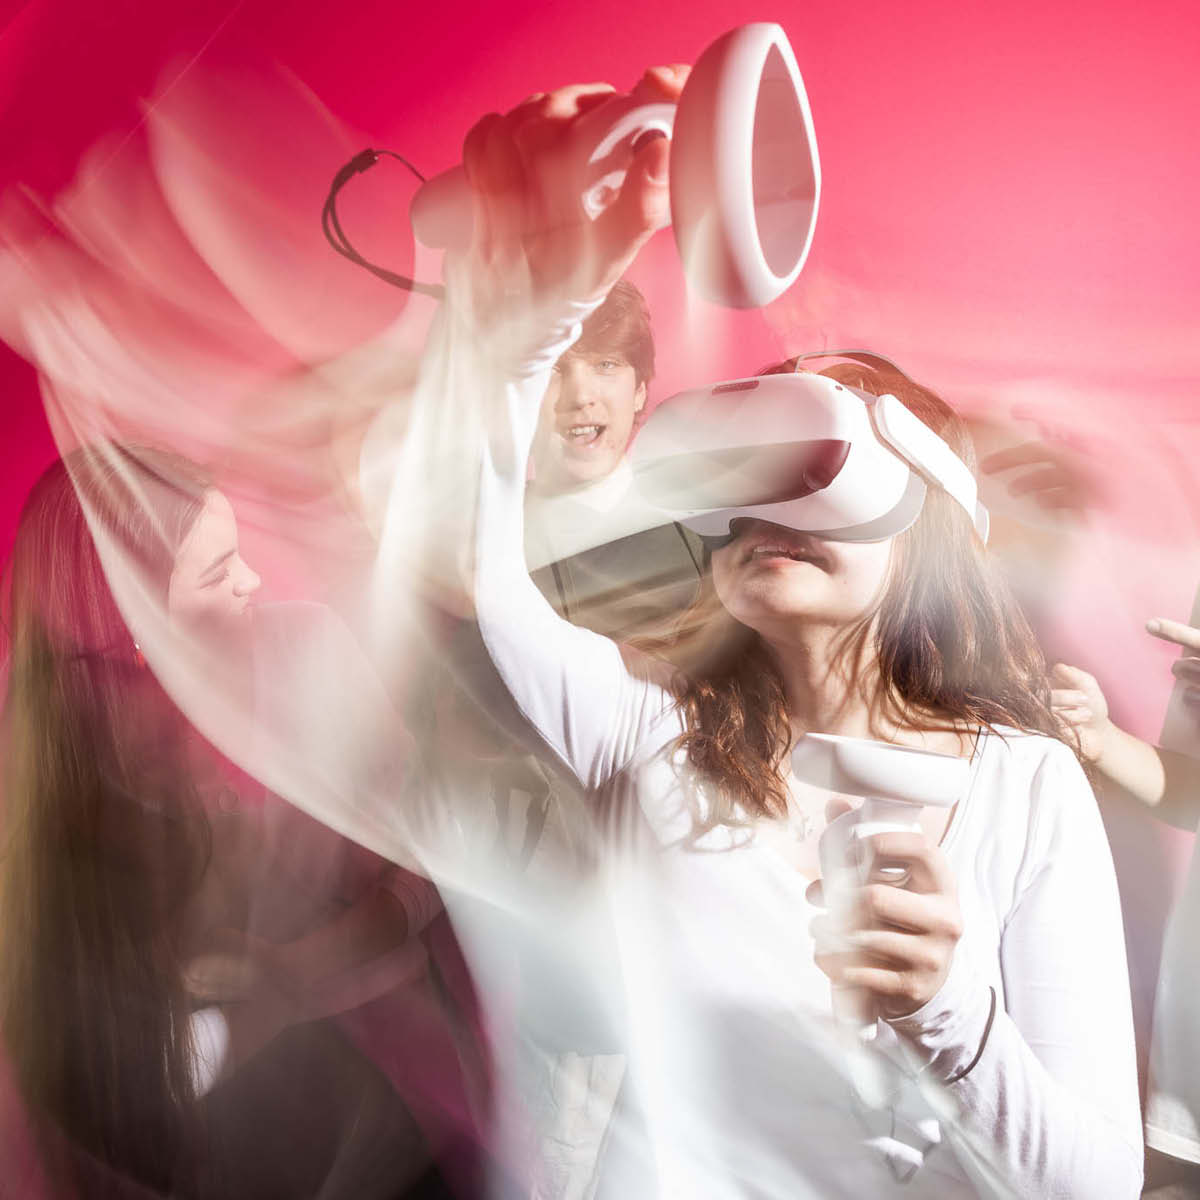 Elever med VR headset i rosa rum